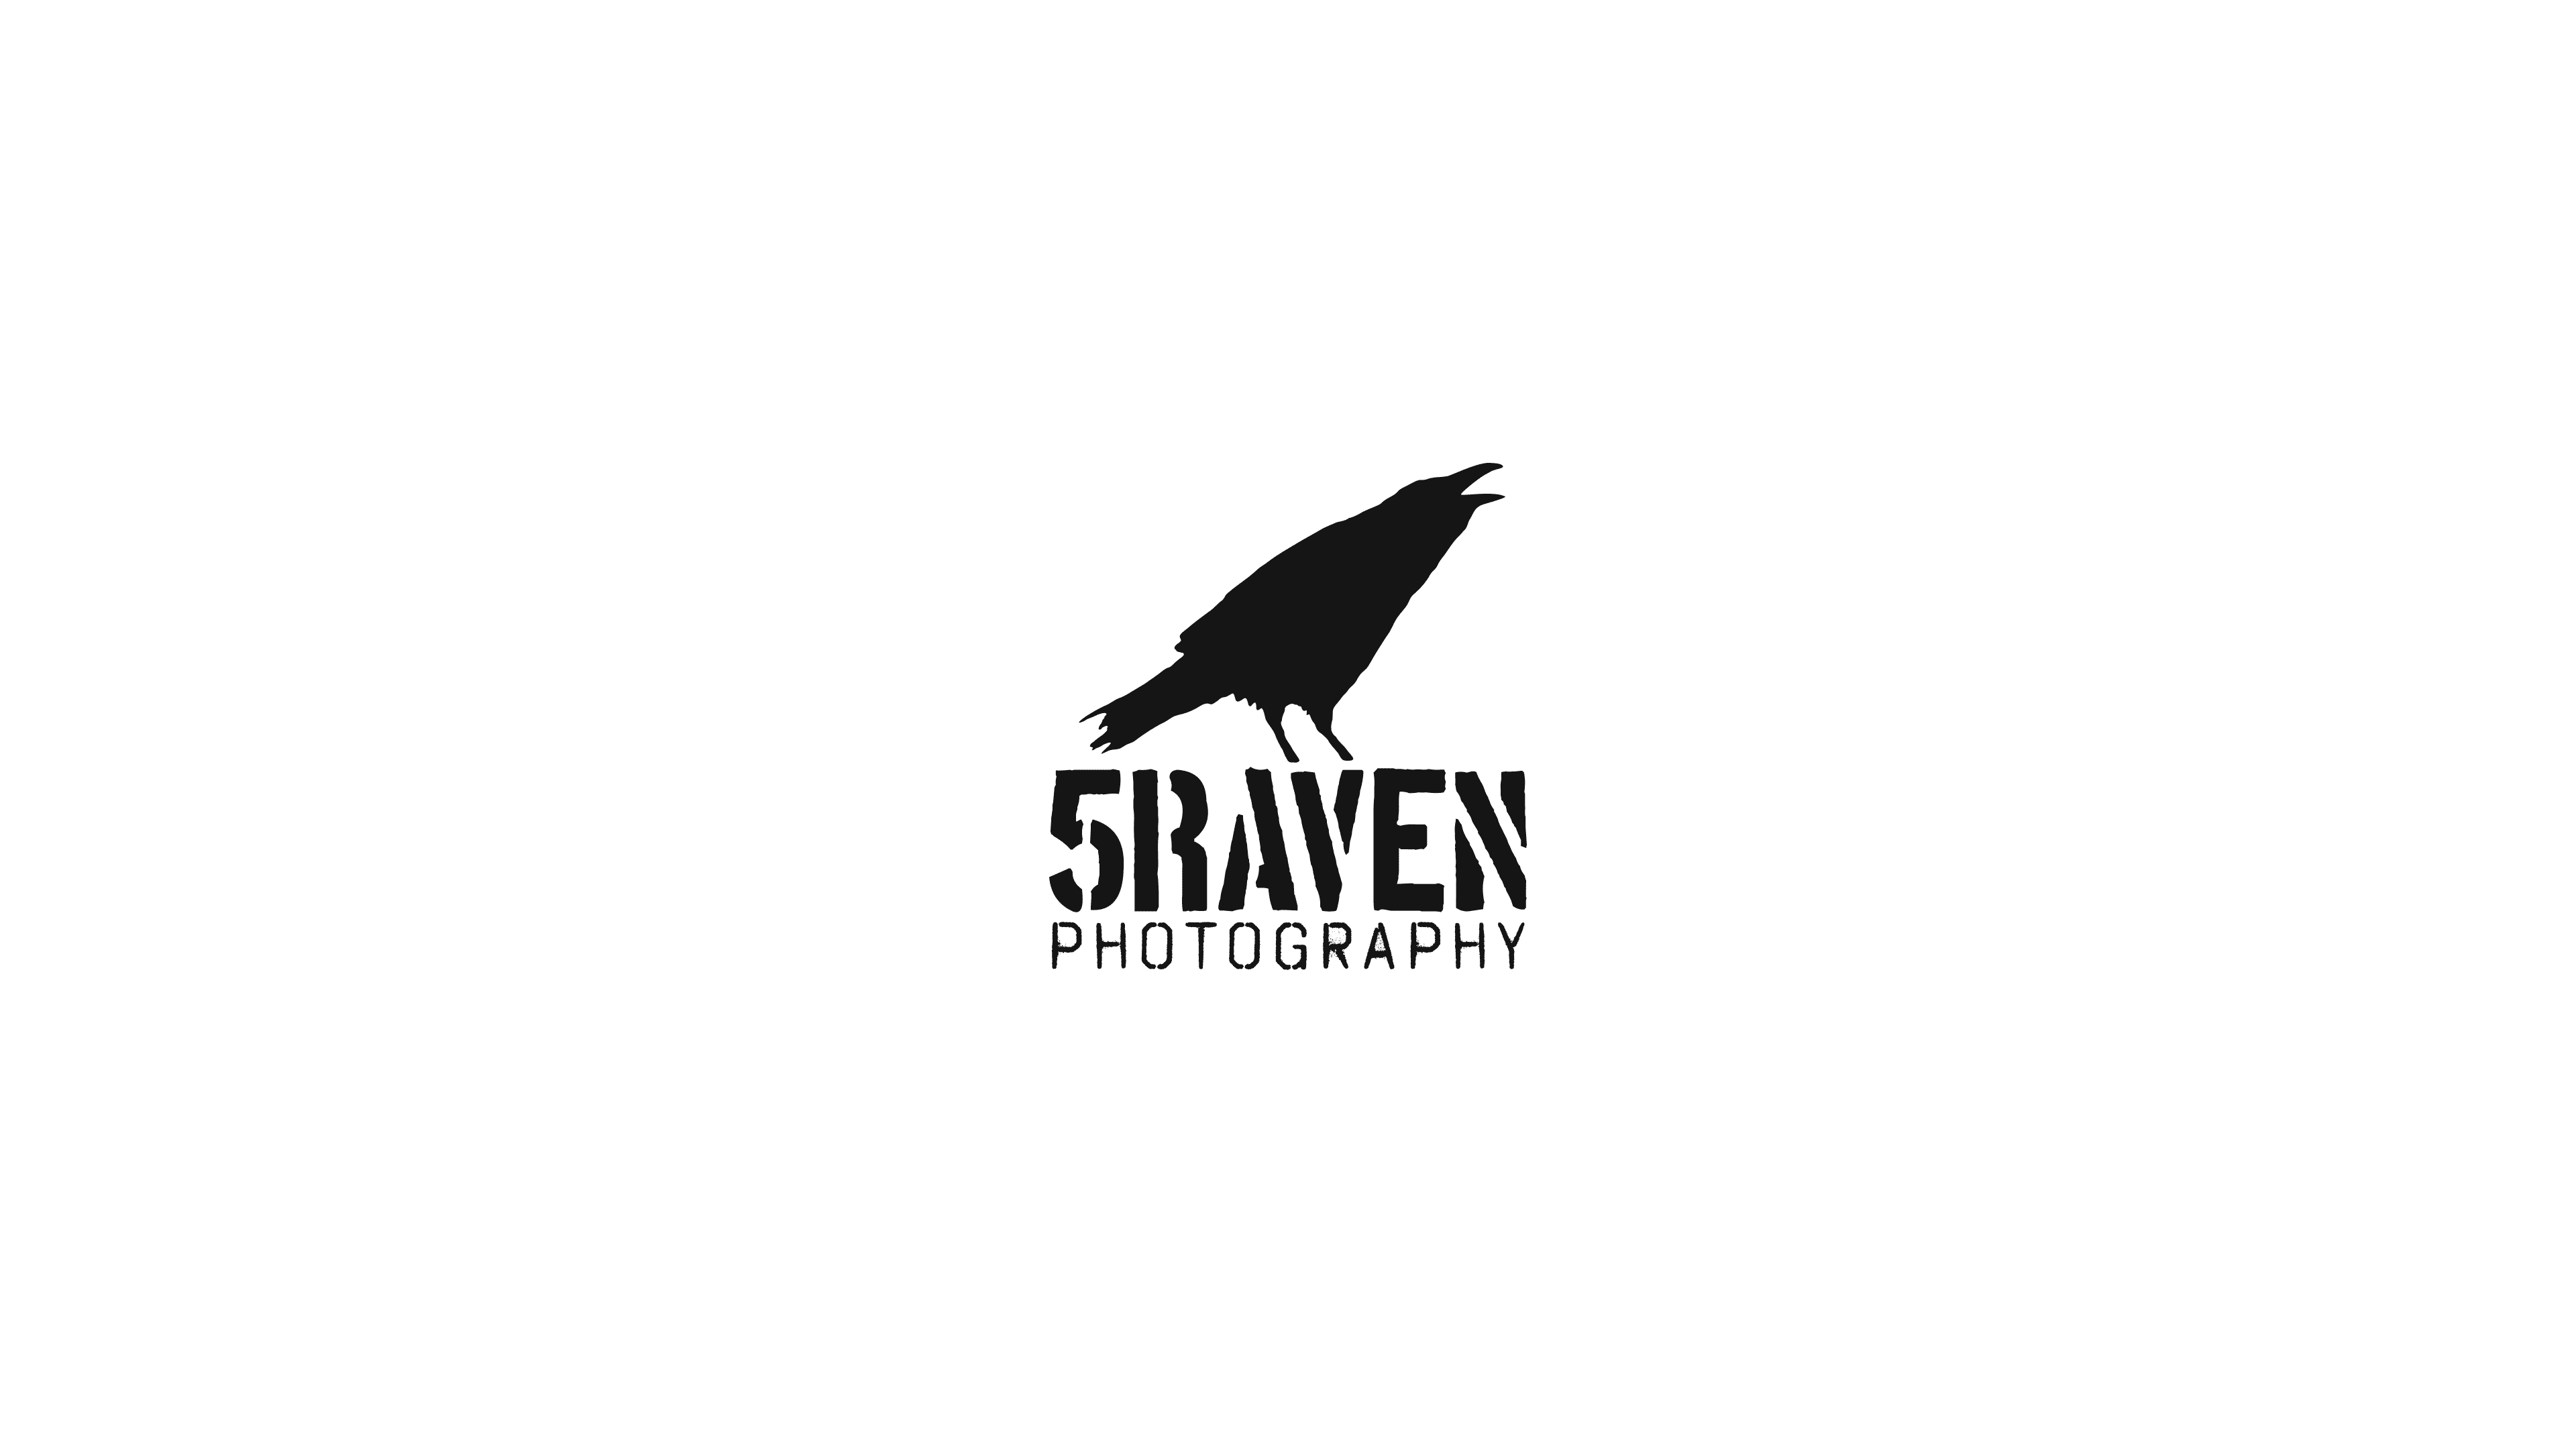 5raven photography logo